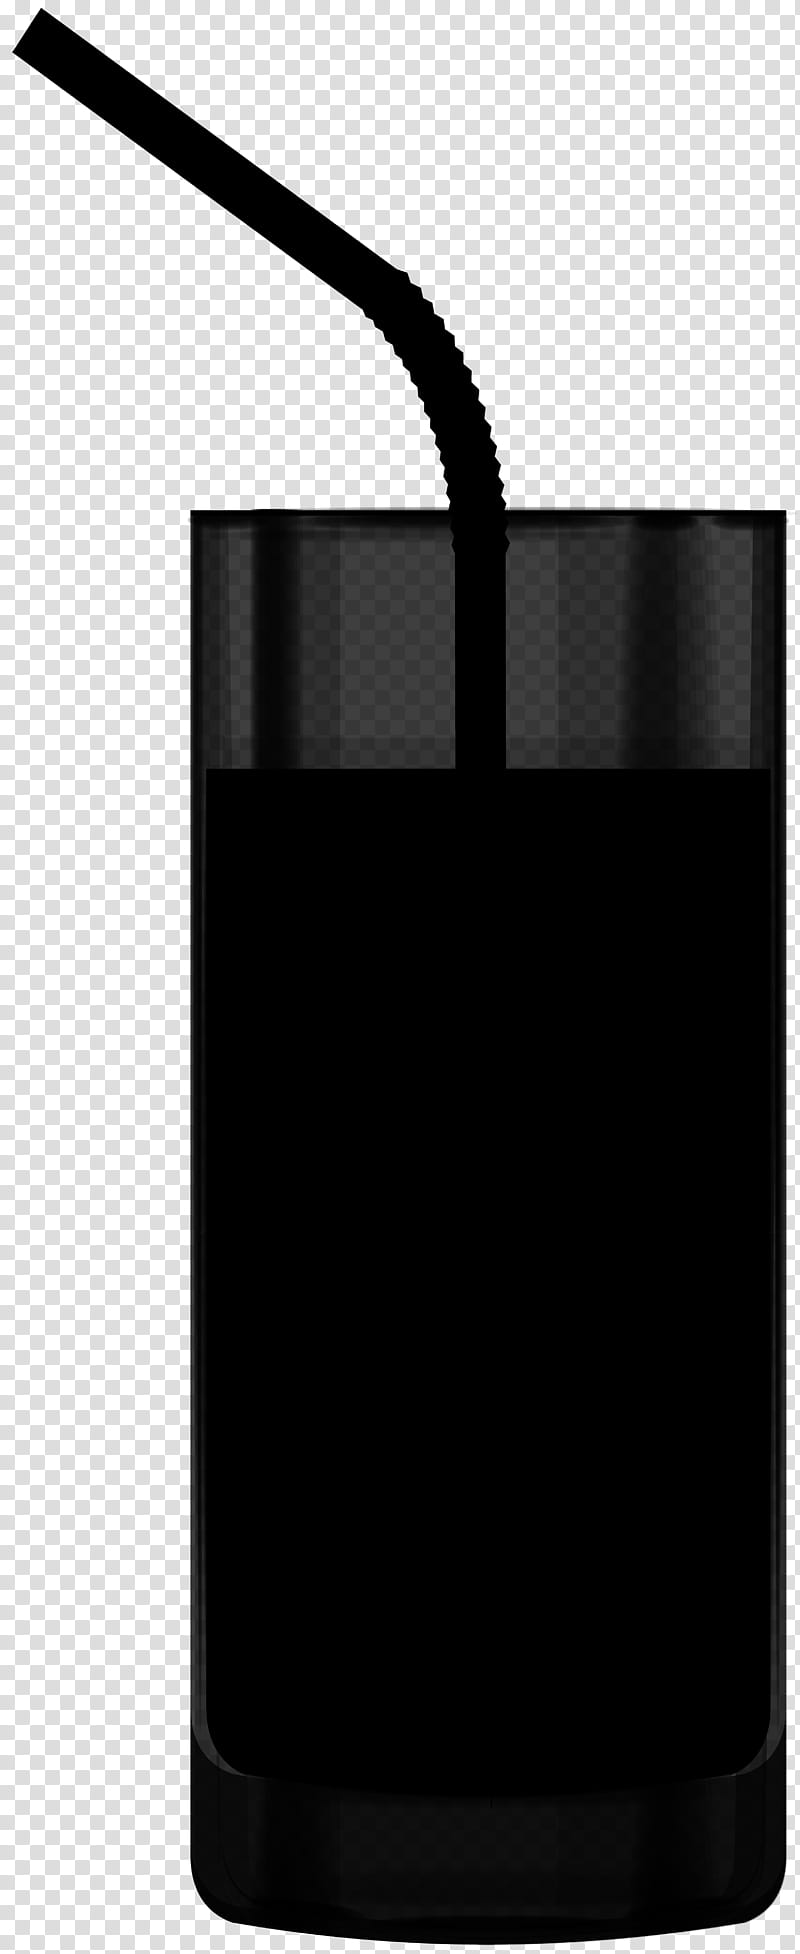 Wine, Cylinder, Black M, Blackandwhite, Wine Bottle, Rectangle transparent background PNG clipart